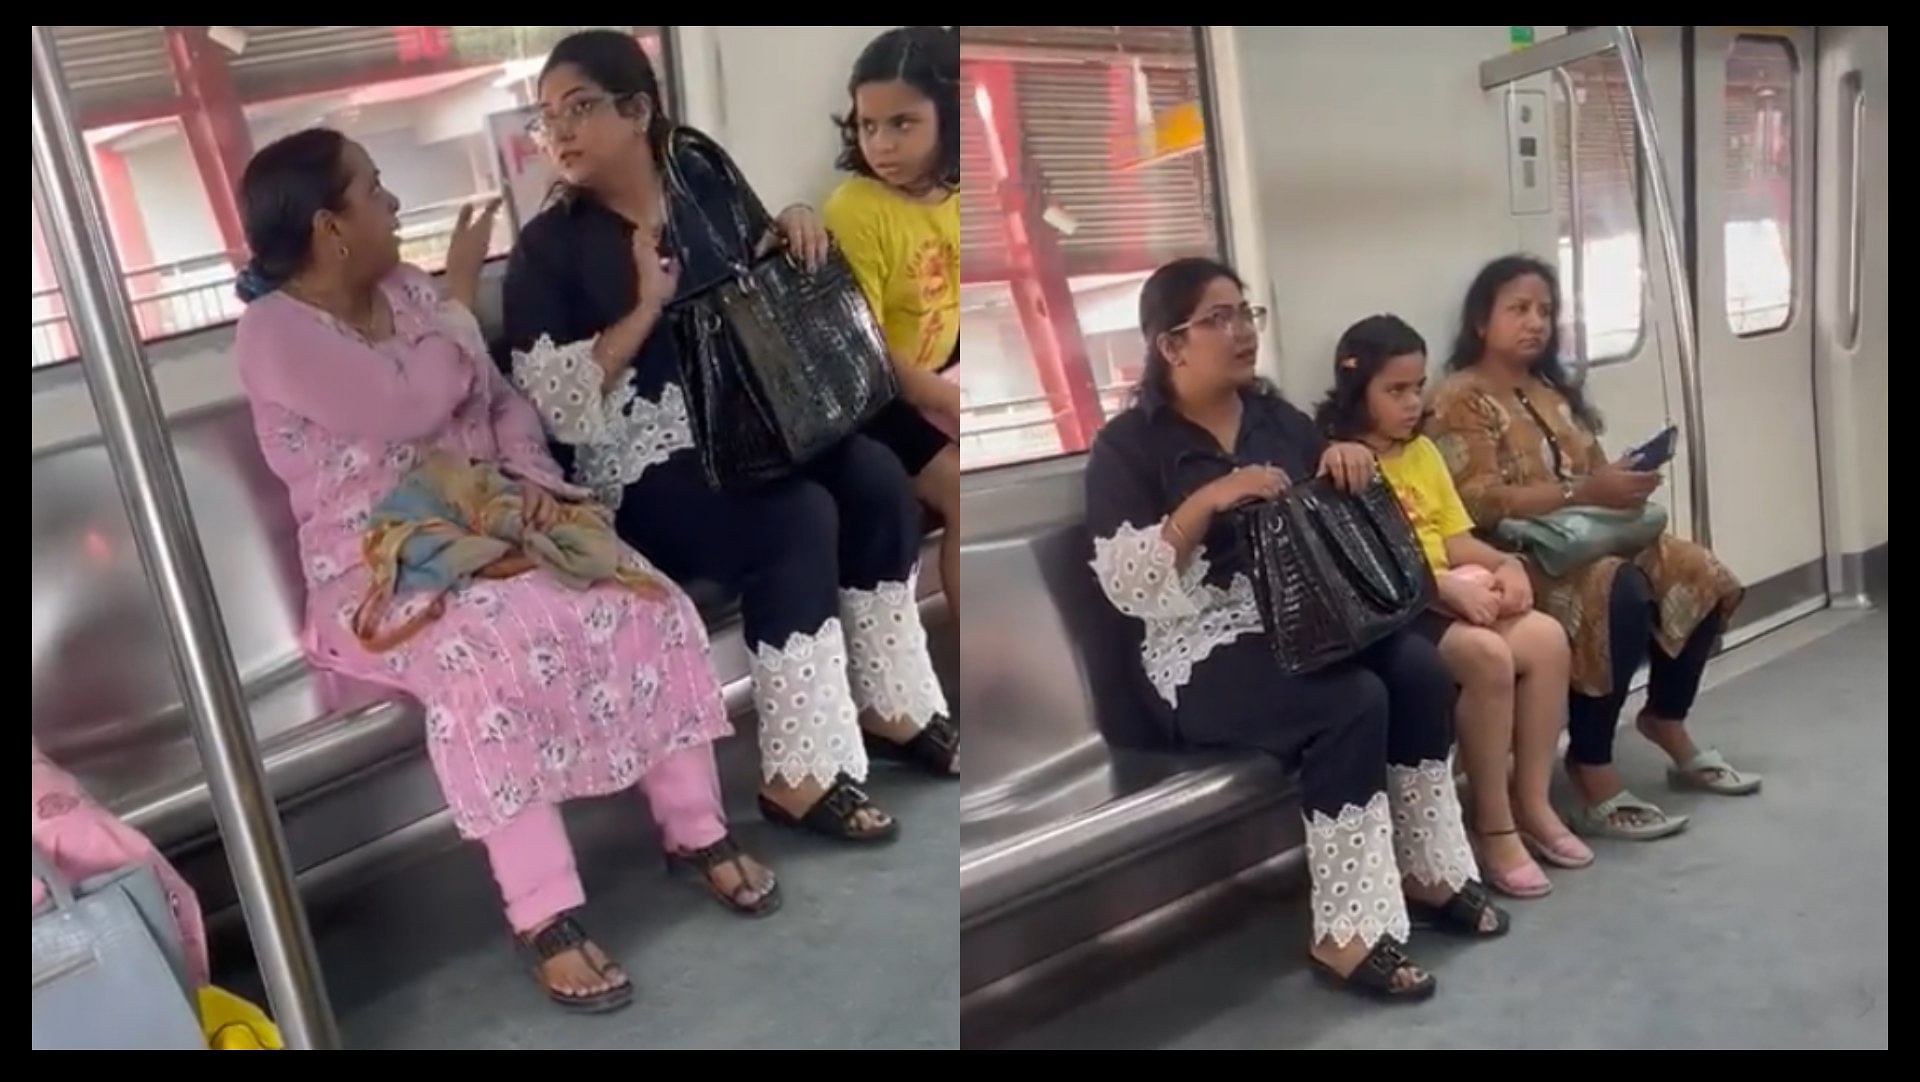 Delhi metro fight two women video voral on social media